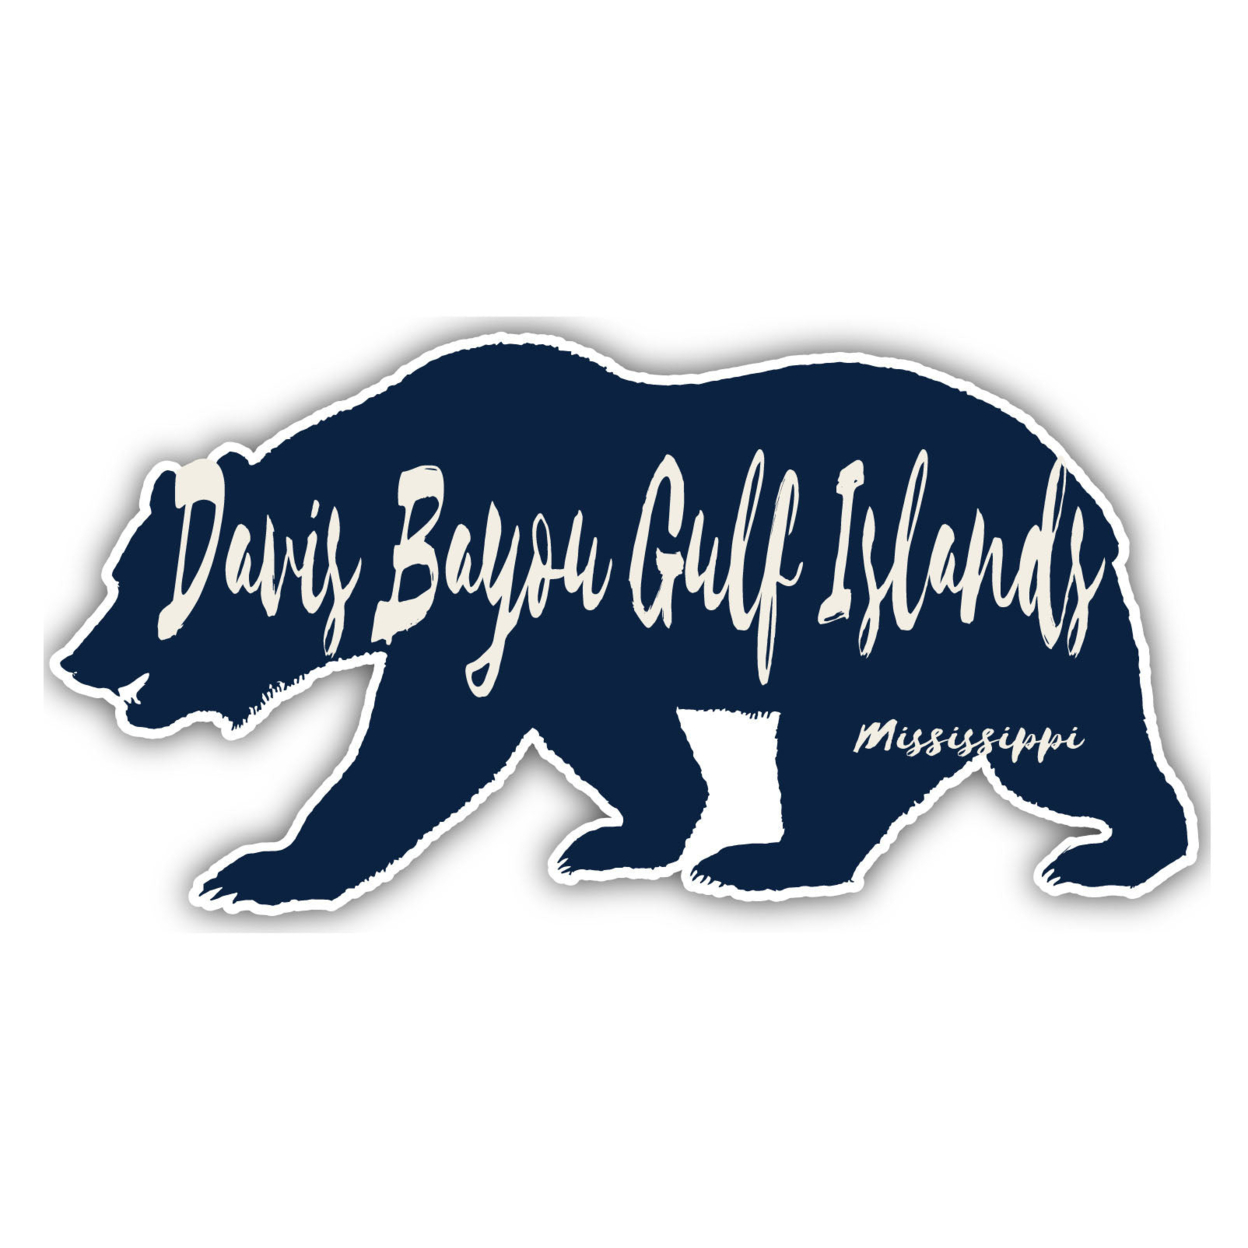 Davis Bayou Gulf Islands Mississippi Souvenir Decorative Stickers (Choose Theme And Size) - 4-Pack, 4-Inch, Bear